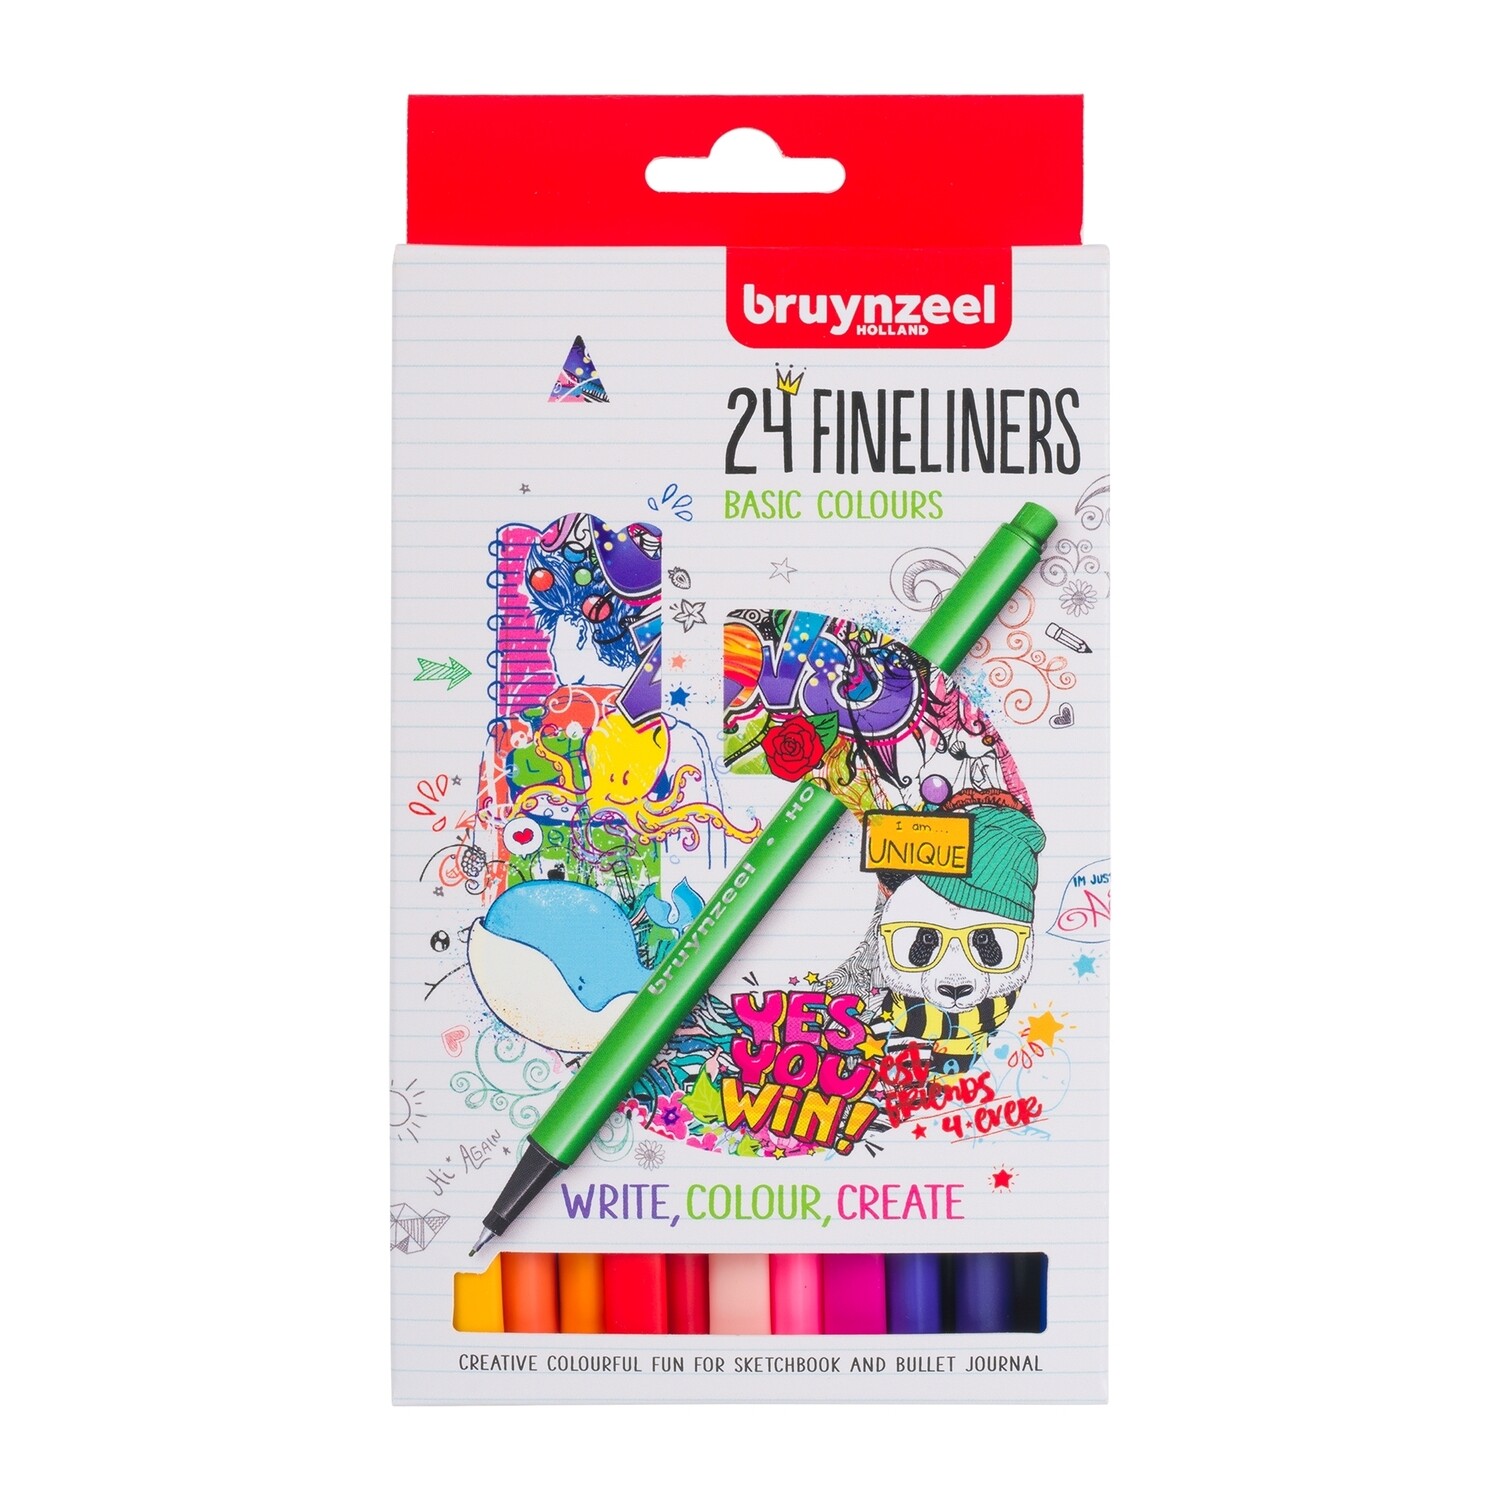 Bruynzeel - Fineliners - 24 Colours - Basics